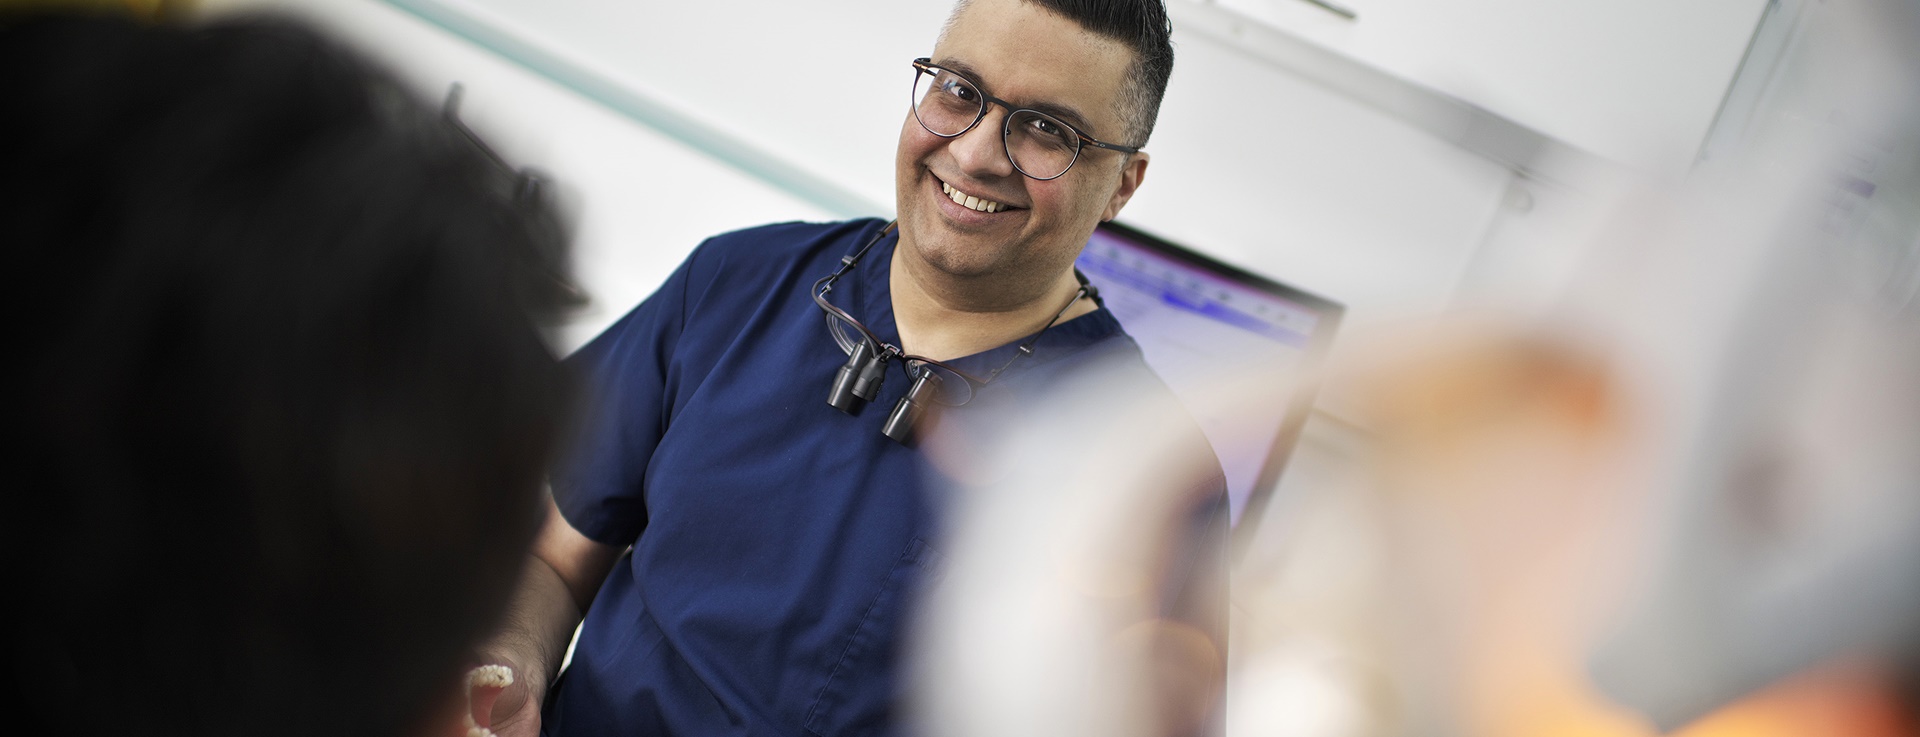 Male dentist smiling in practice